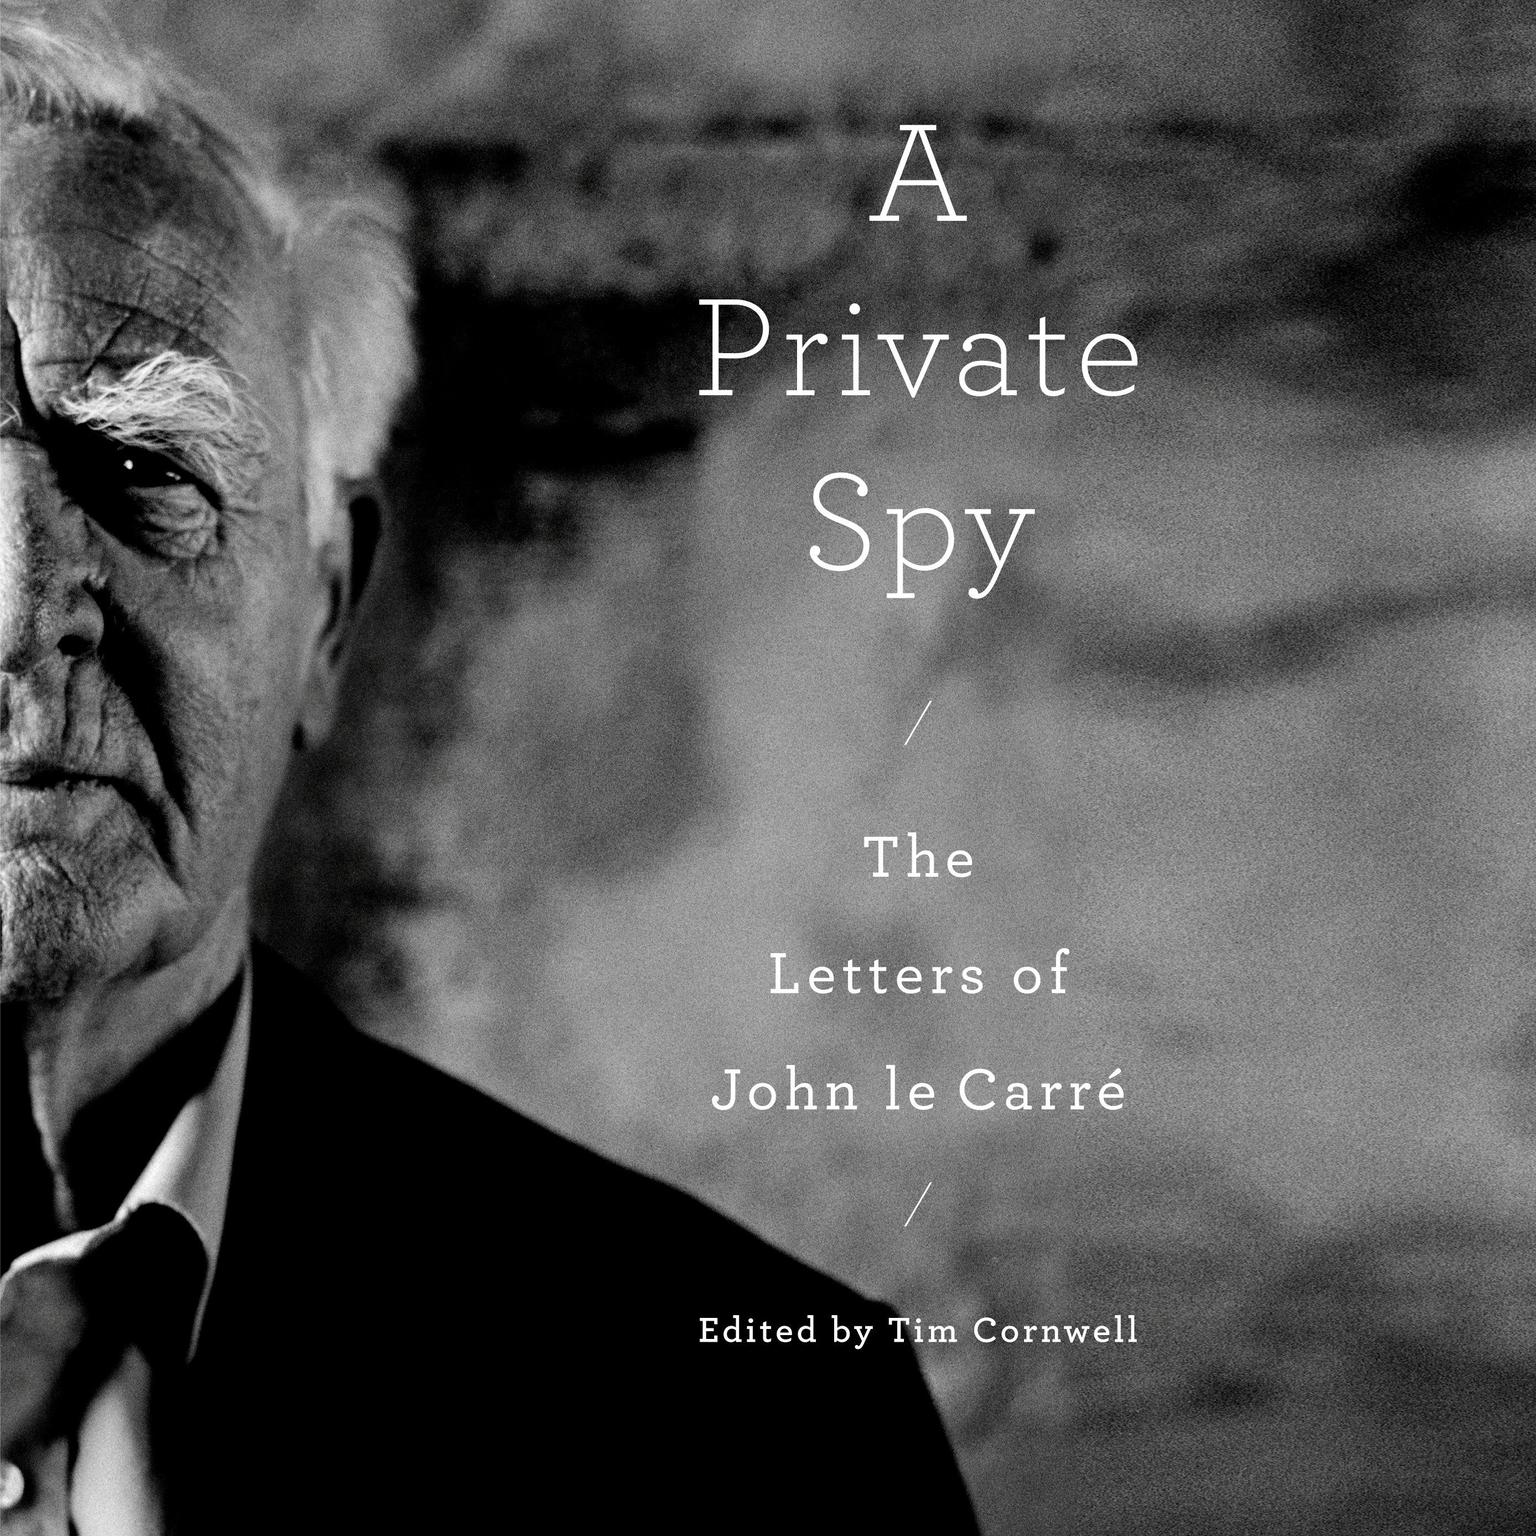 A Private Spy: The Letters of John le Carré Audiobook, by John le Carré